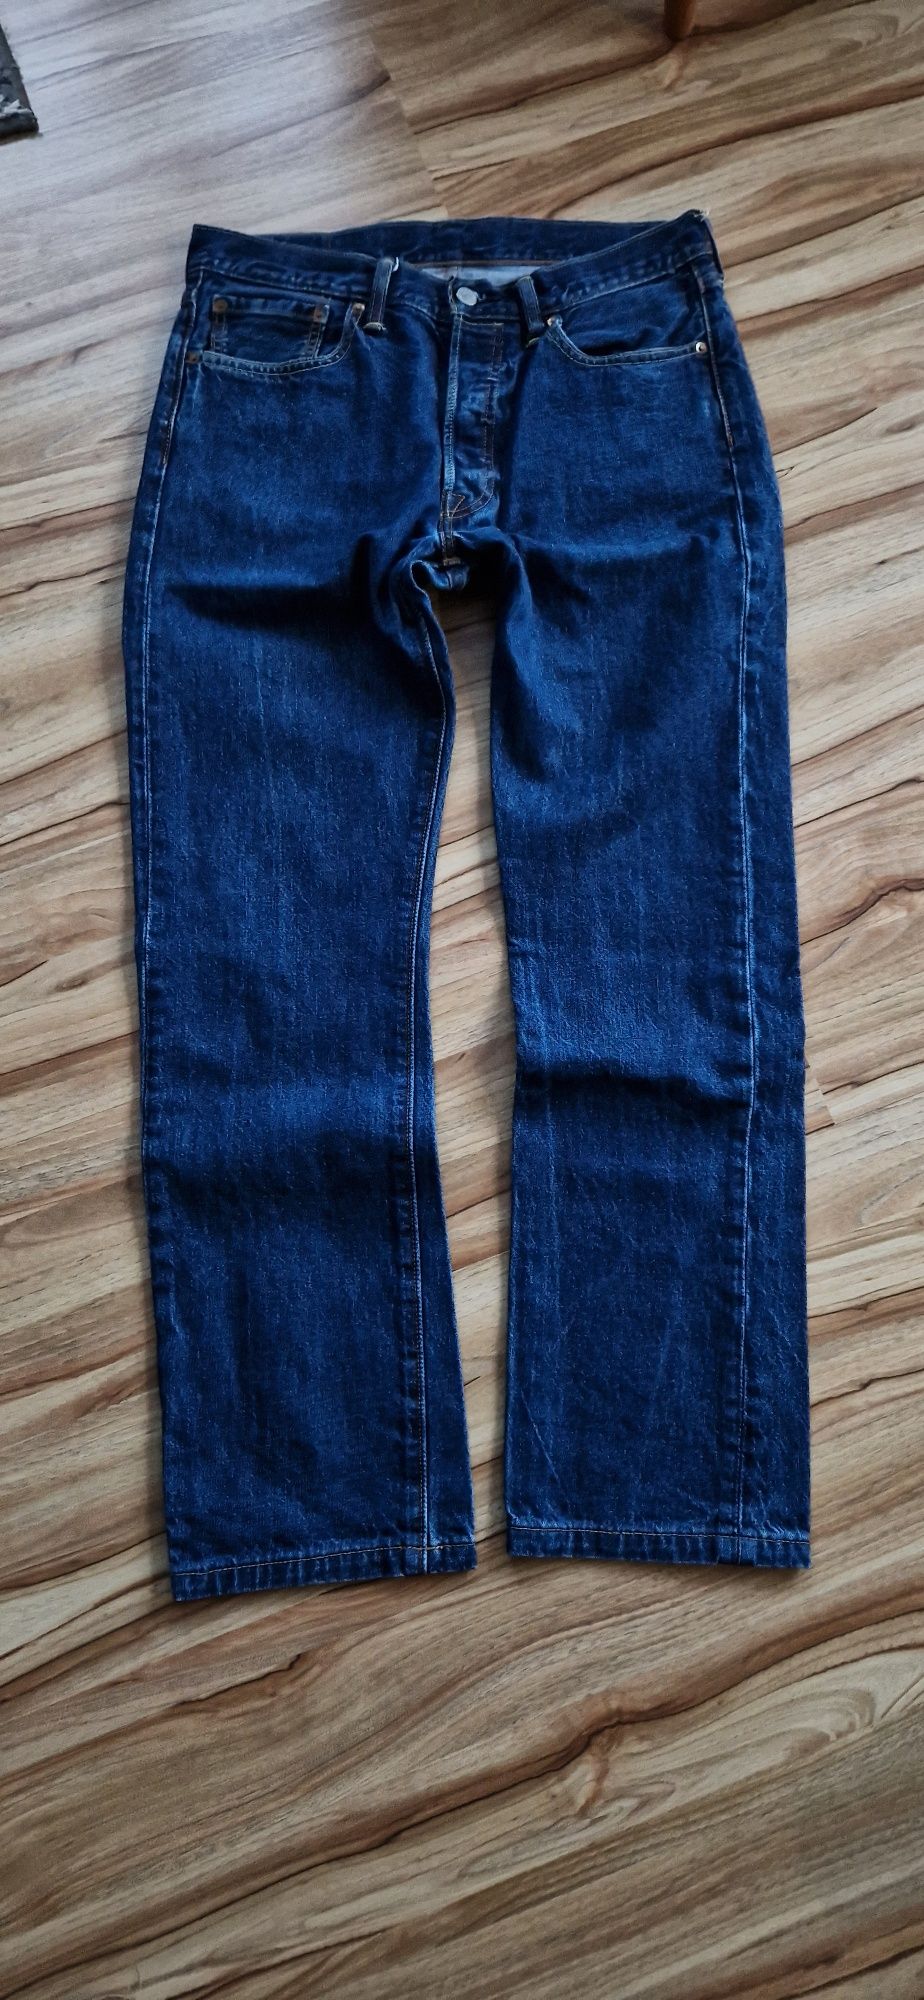 LEVIS 501 32/34 spodnie jeansy męskie